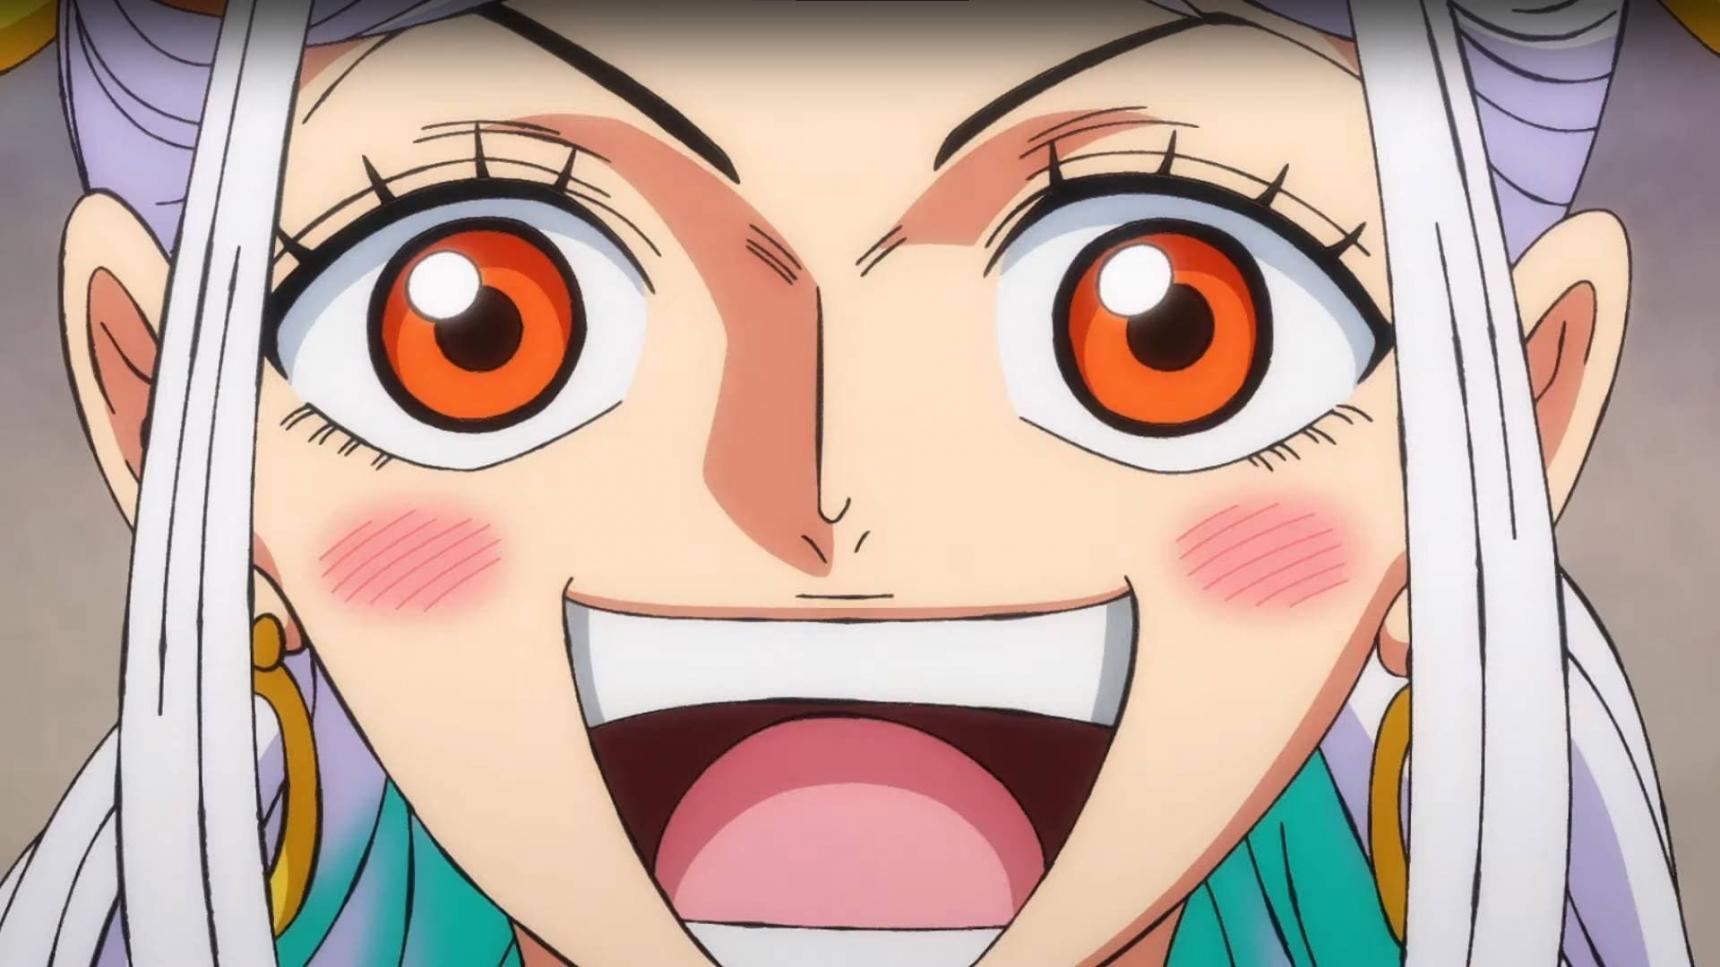 Poster del episodio 999 de One Piece online